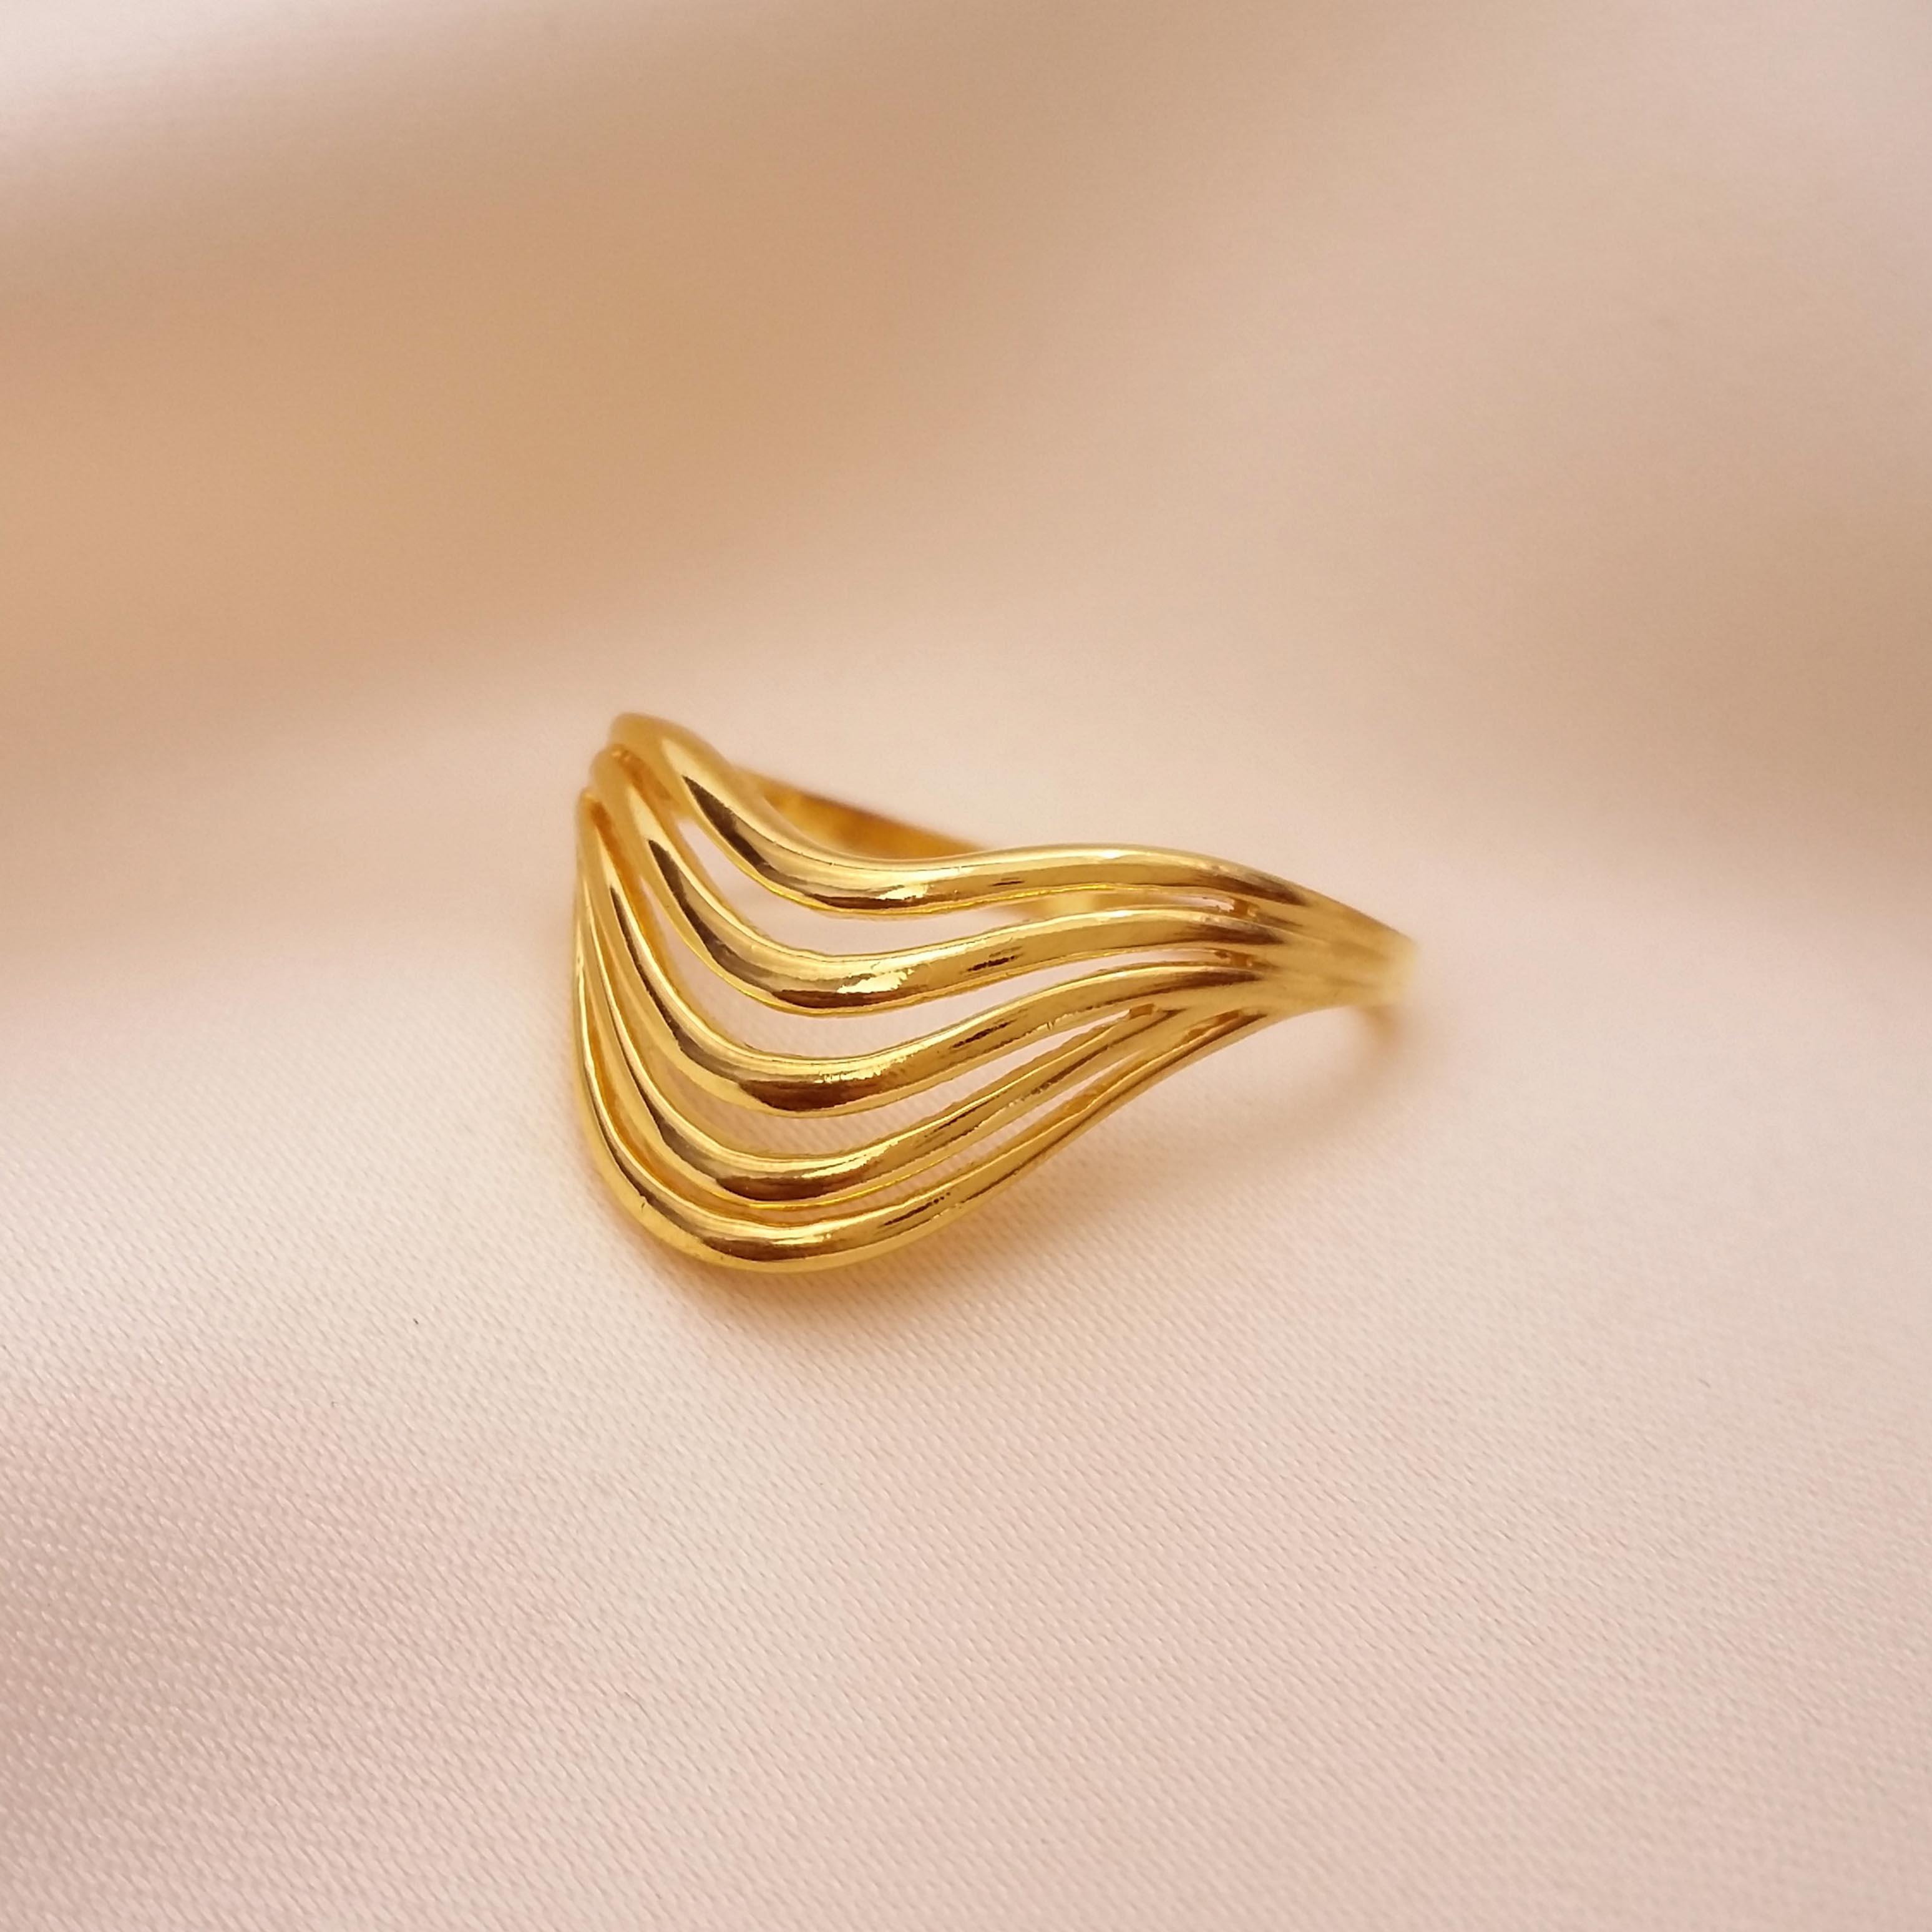 River rock 14K gold ring - Formia Design Custom Jewelry